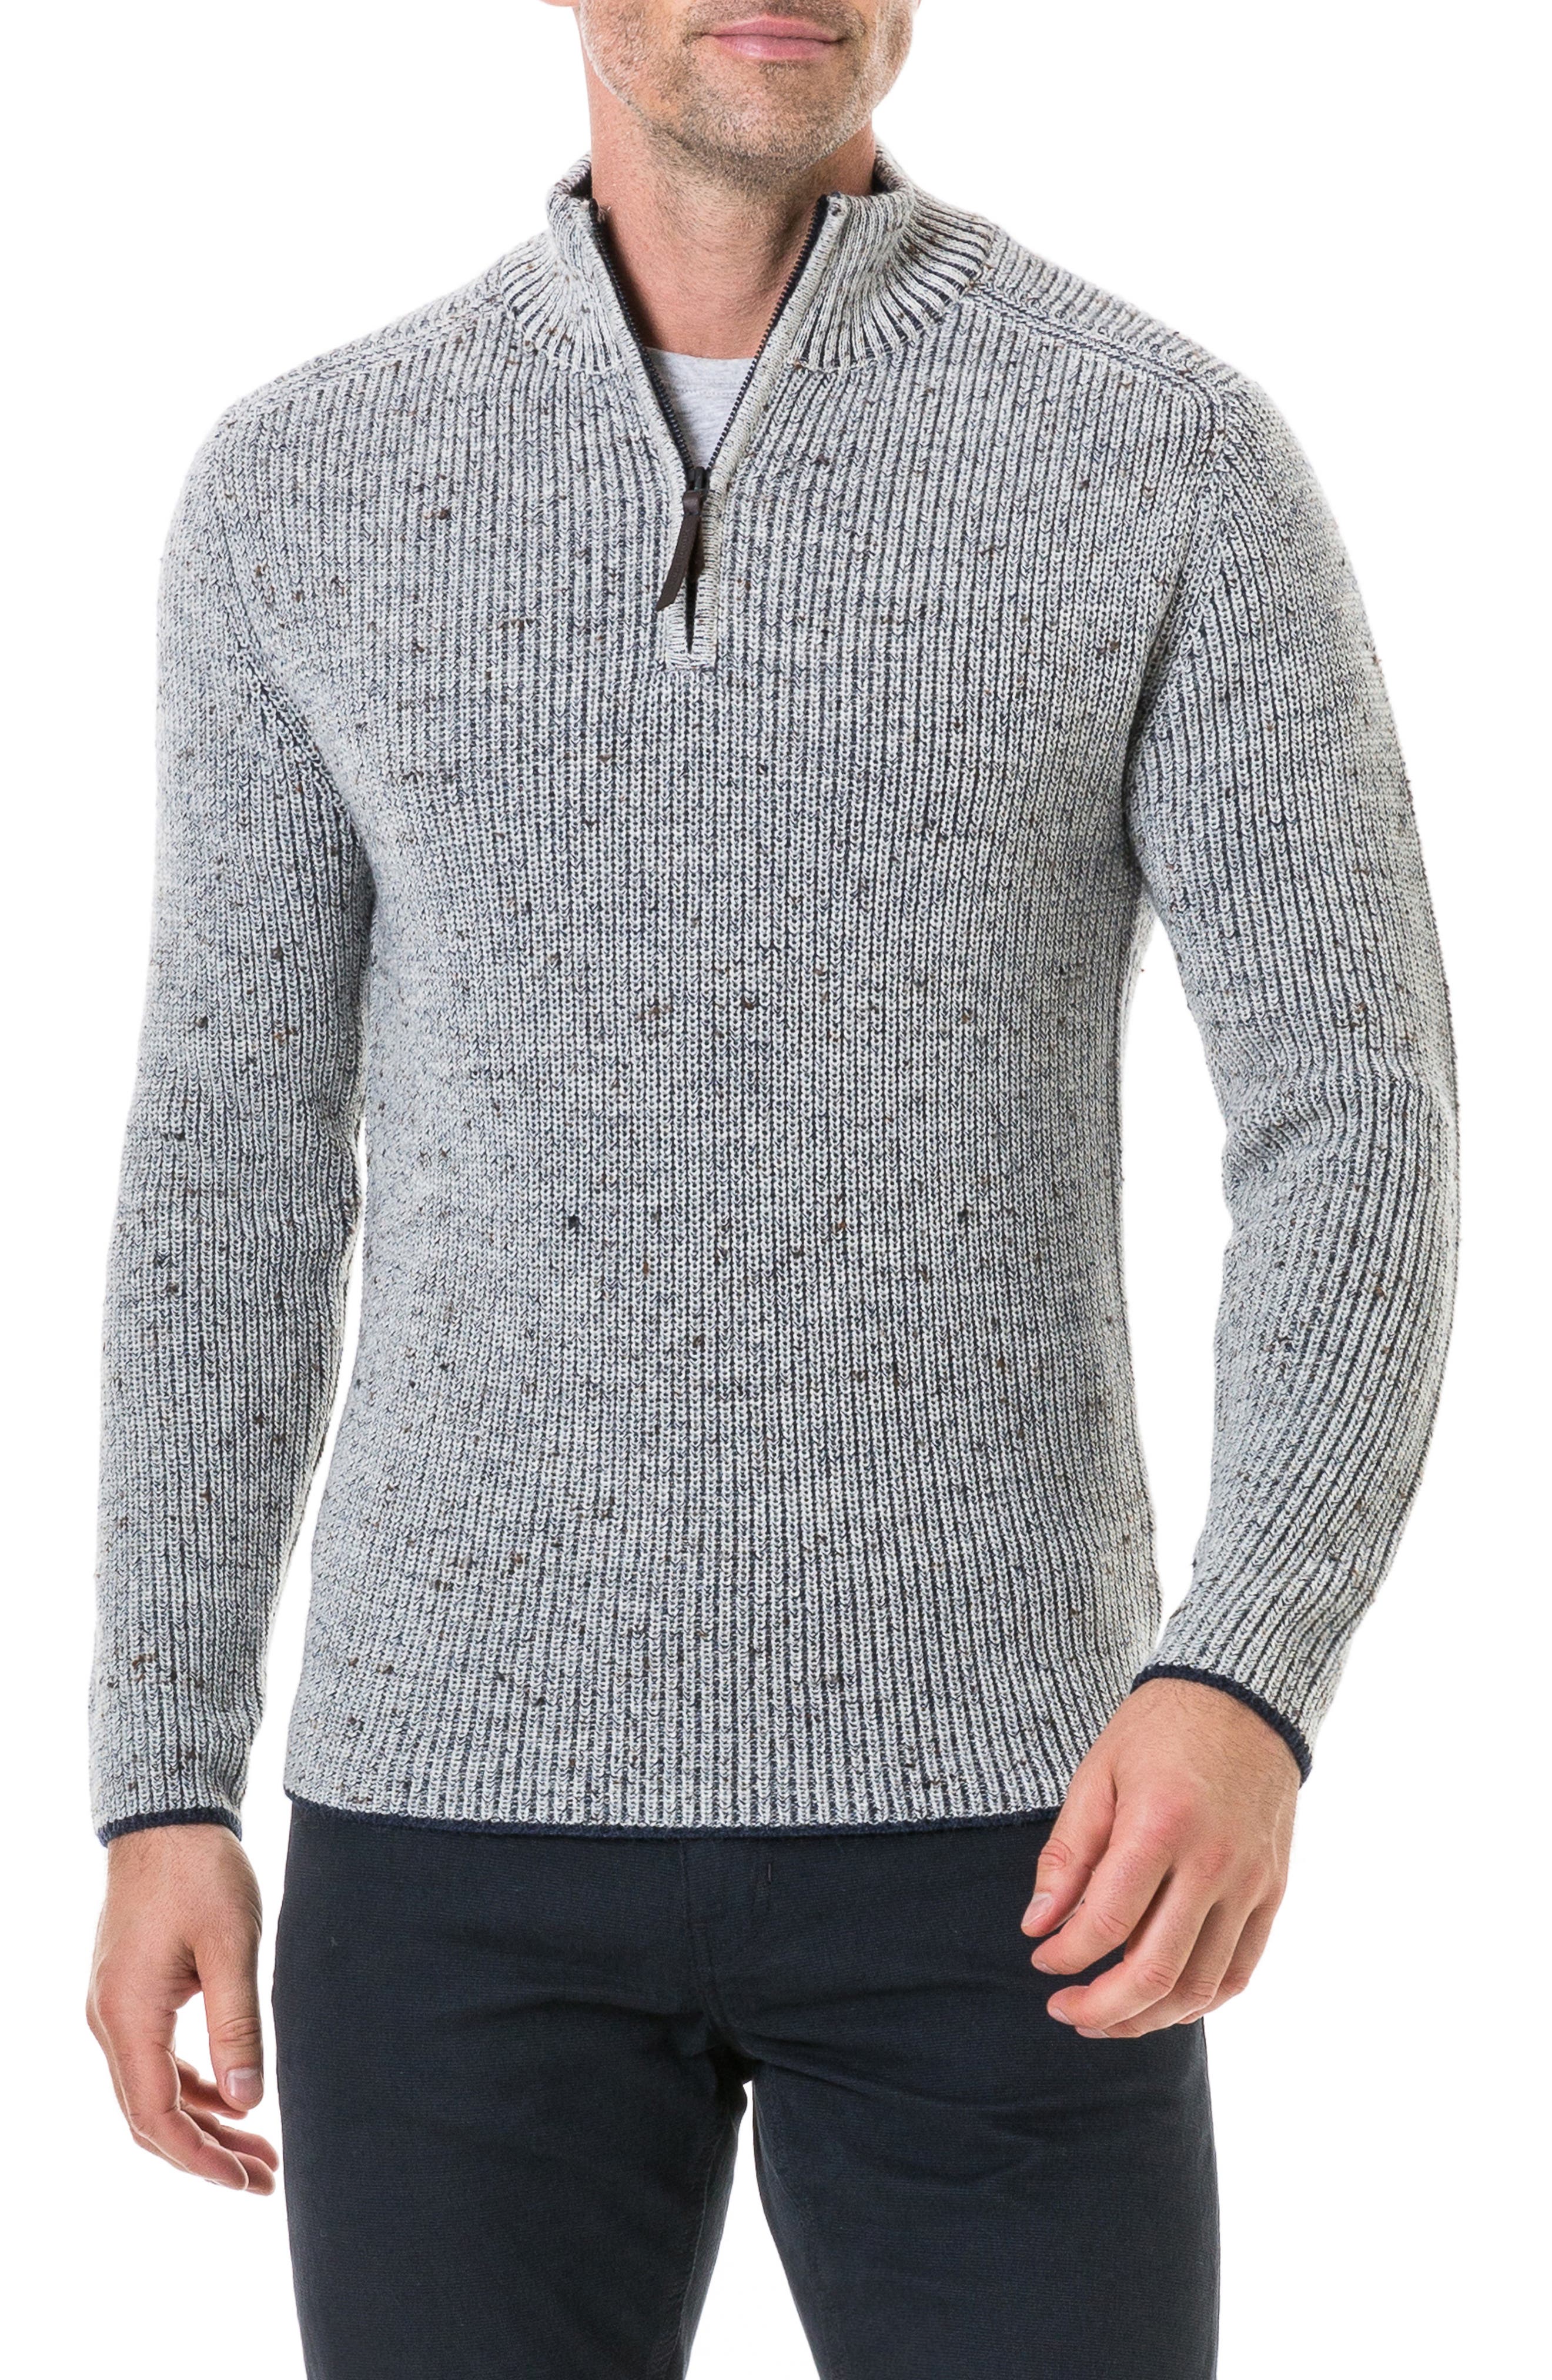 XQS Mens Fall Slim Plain Turtle Neck Rib-Knit Comfy Pullover Sweater 